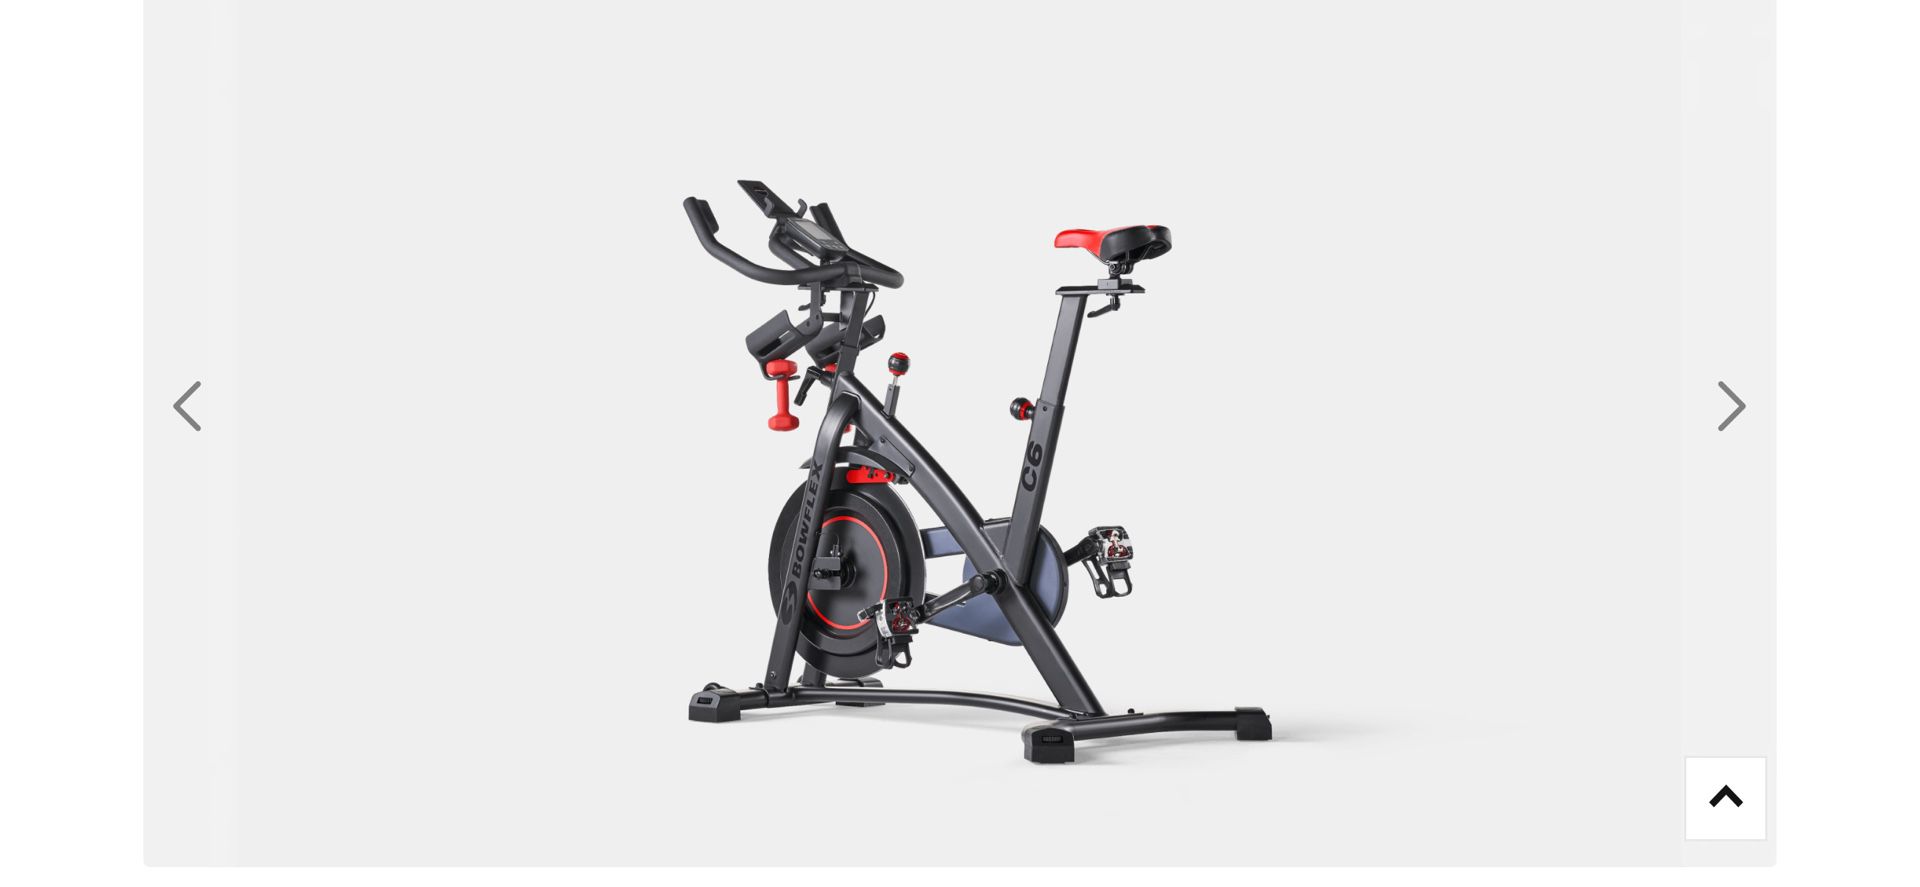 Like New Bowflex C6 Indoor Exercise Bike $375 OBO